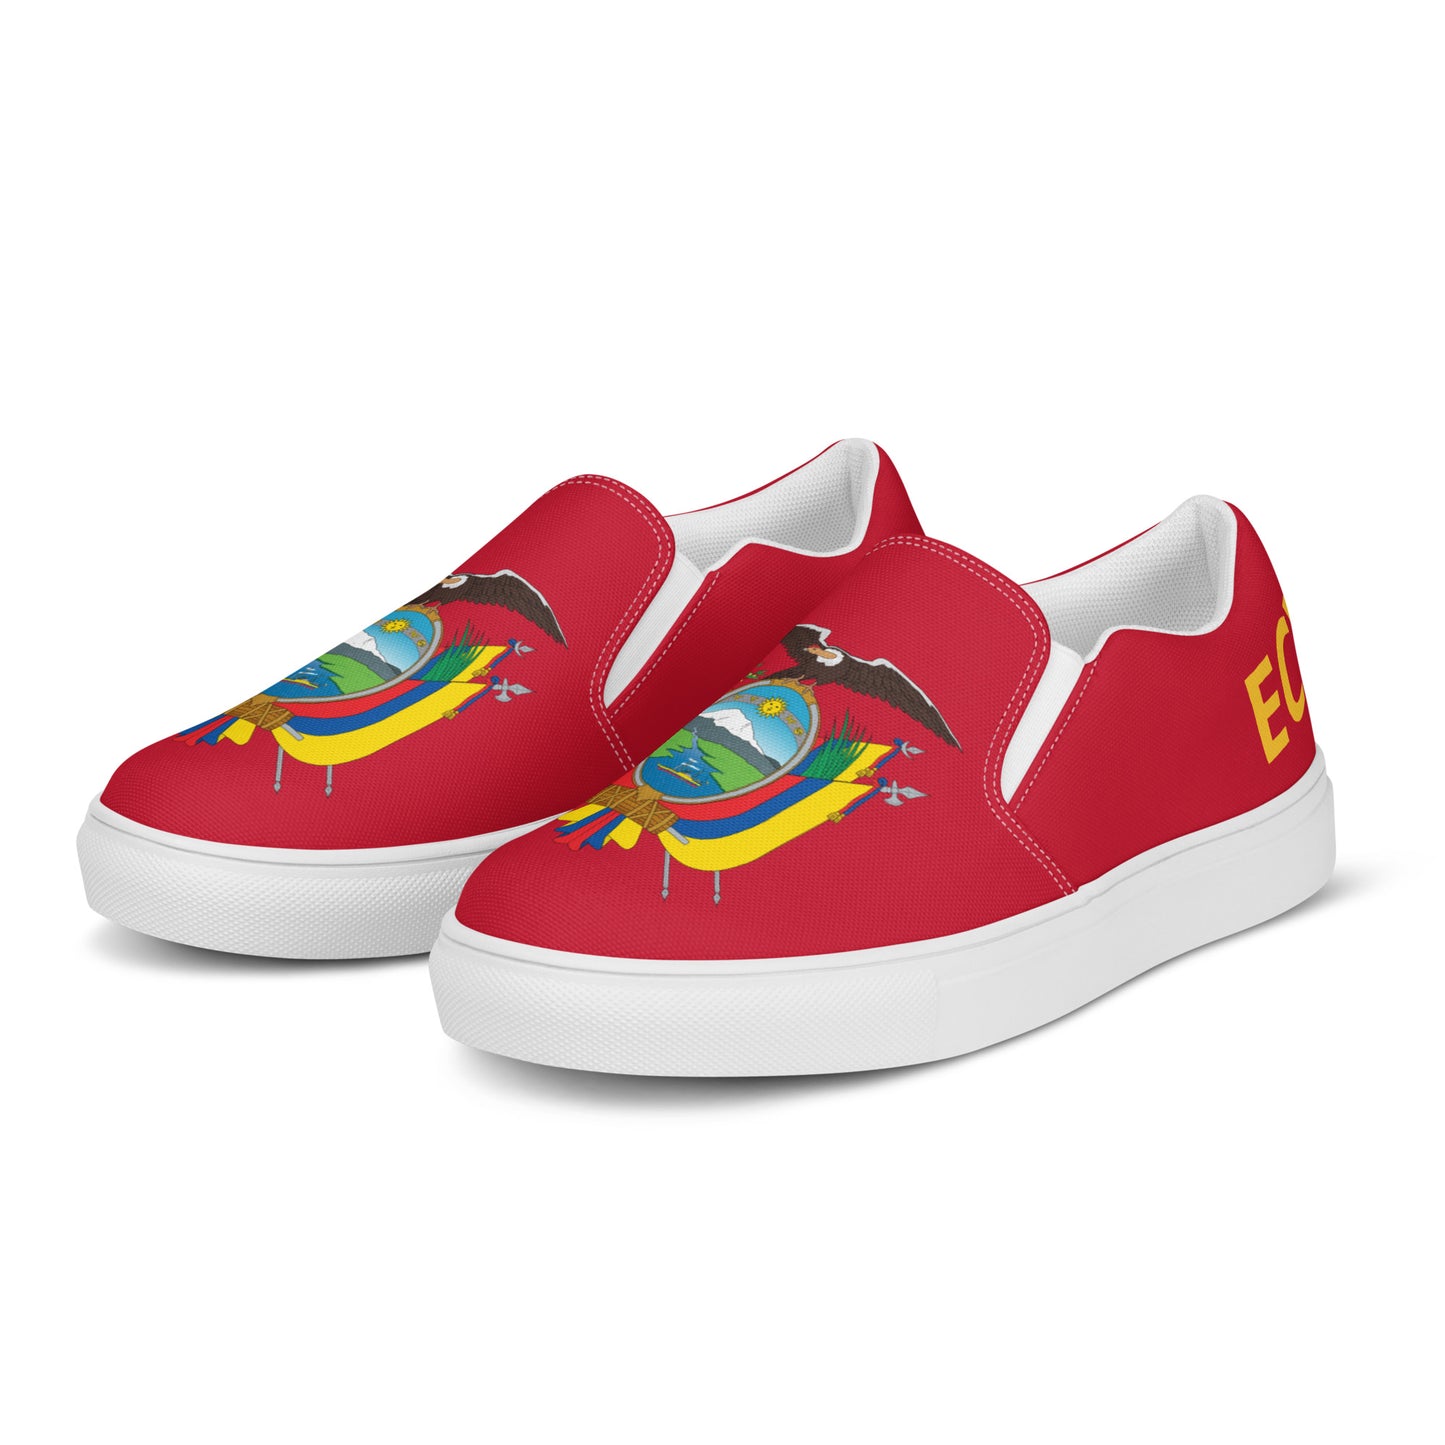 Ecuador - Women - Red - Slip-on shoes